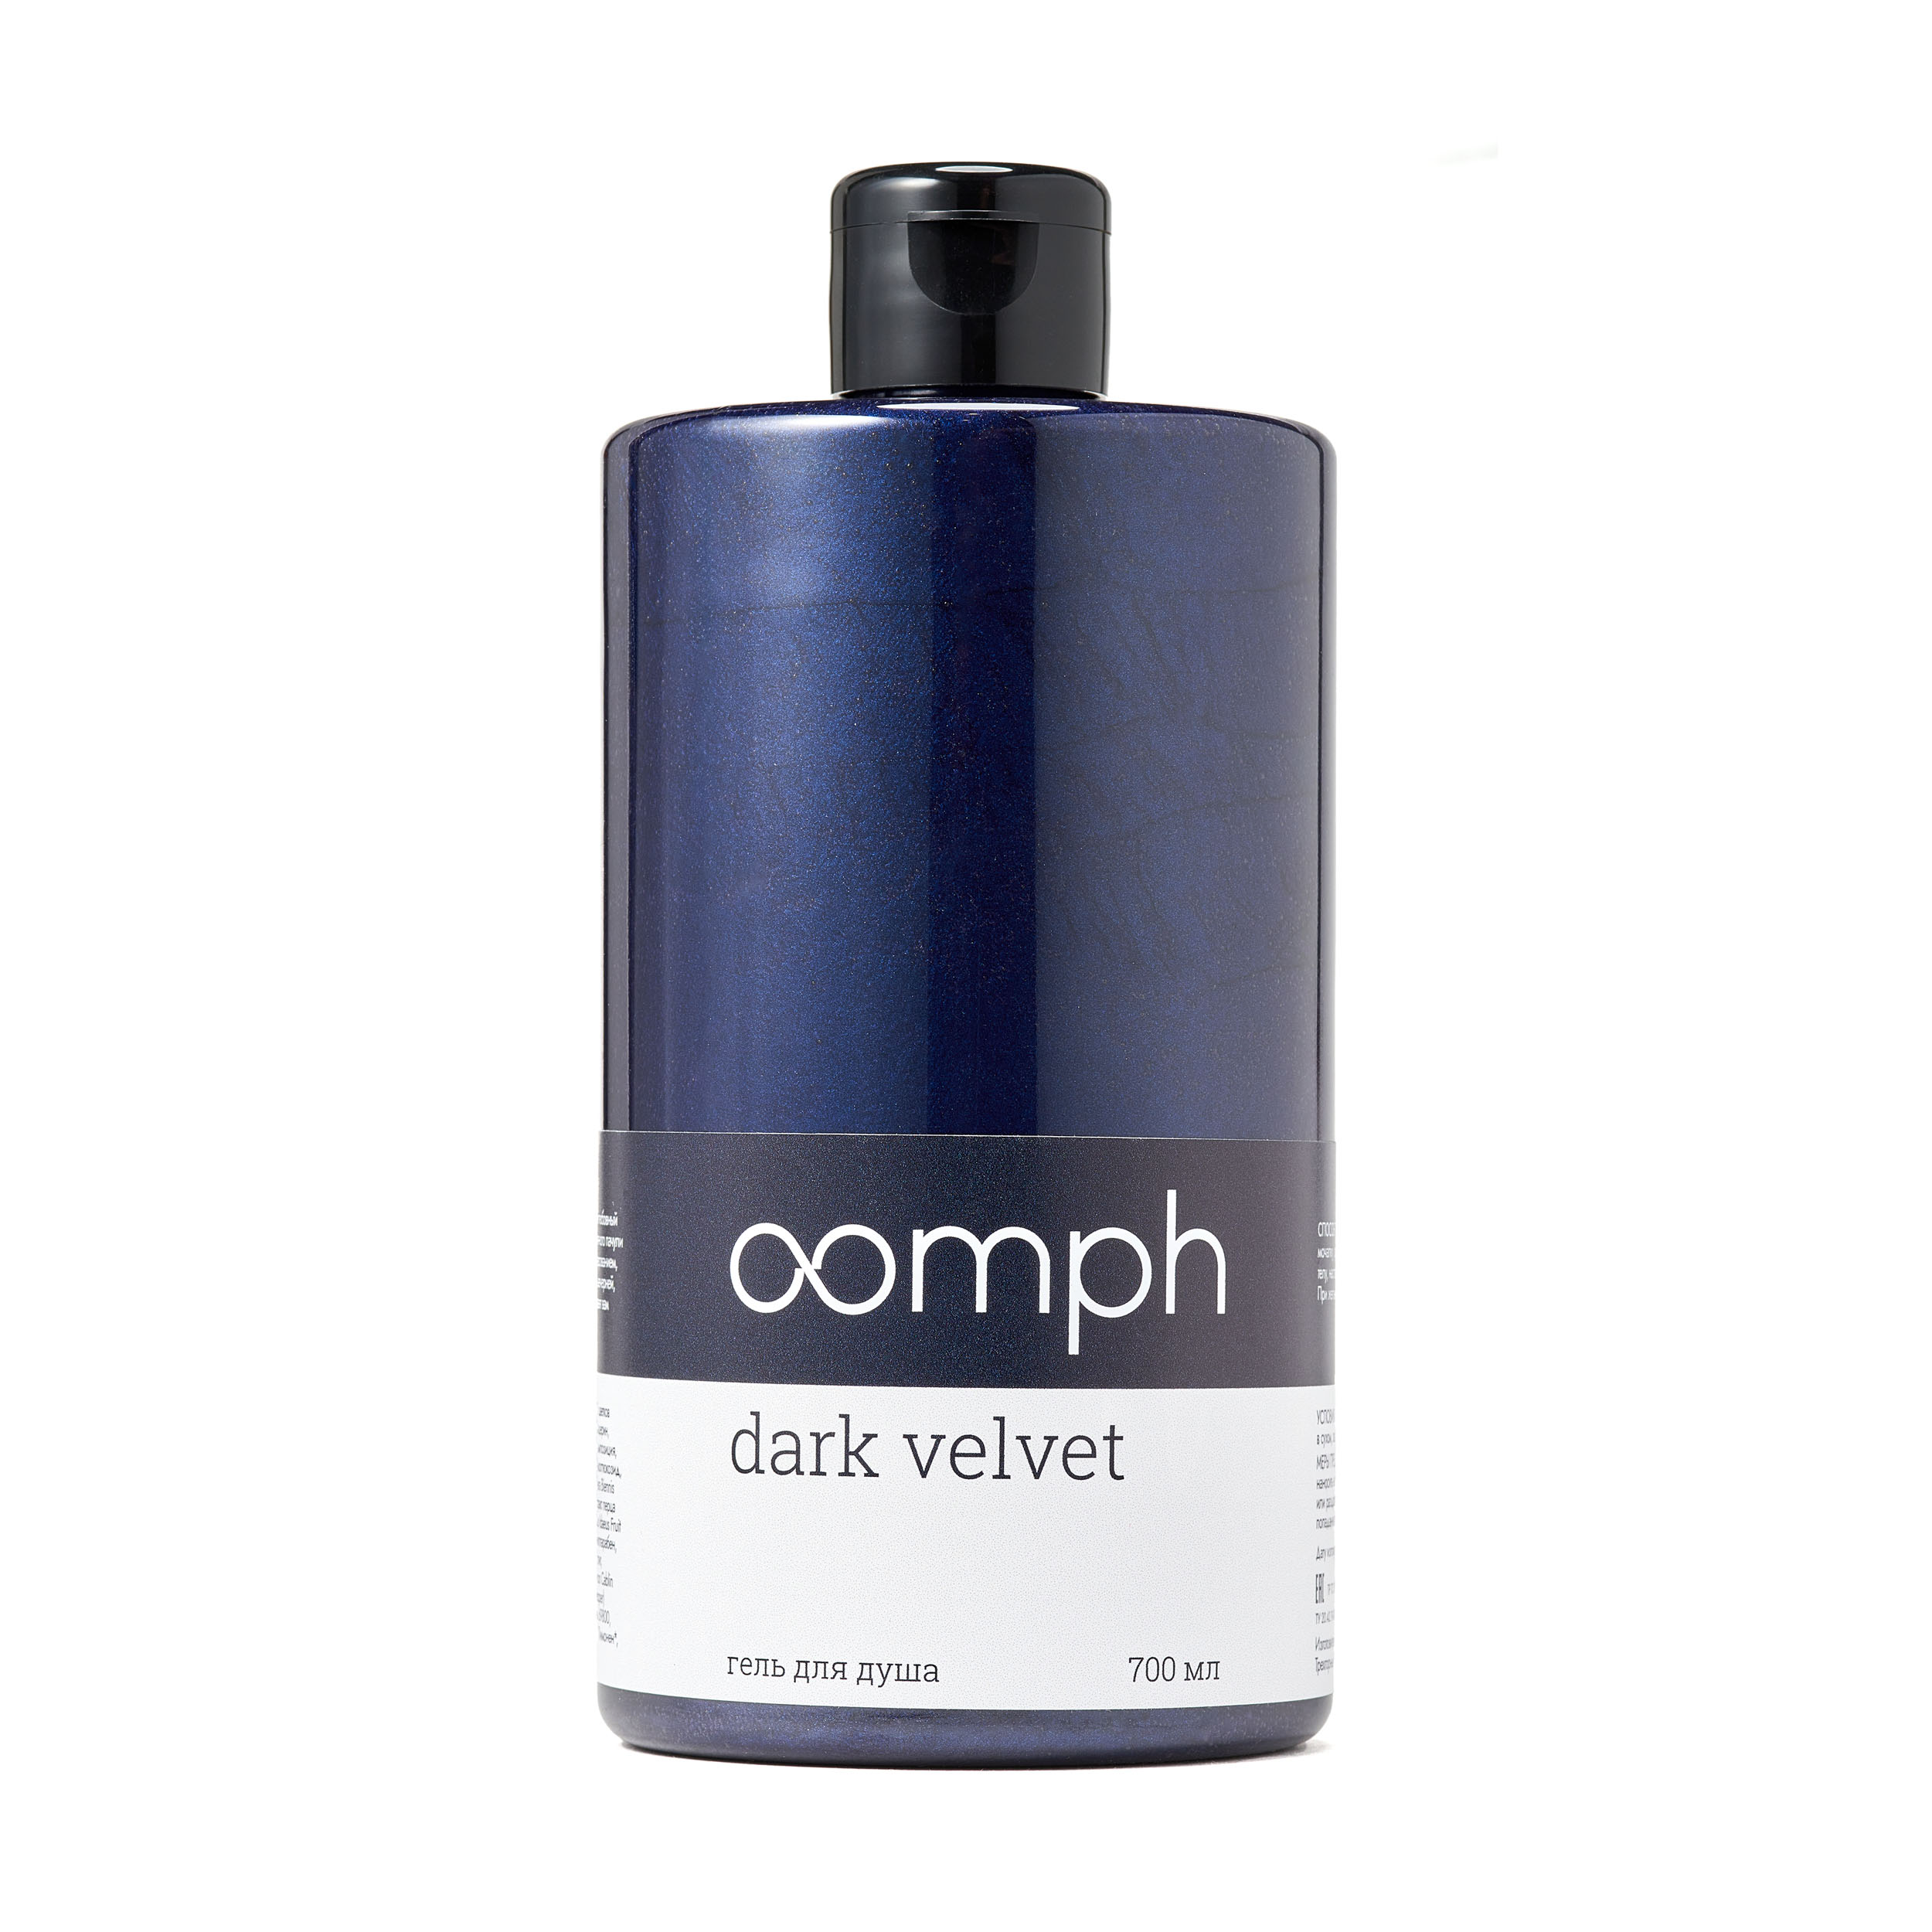 Гель для душа OOMPH Dark velvet 700мл любовный эксперимент по американски армас е